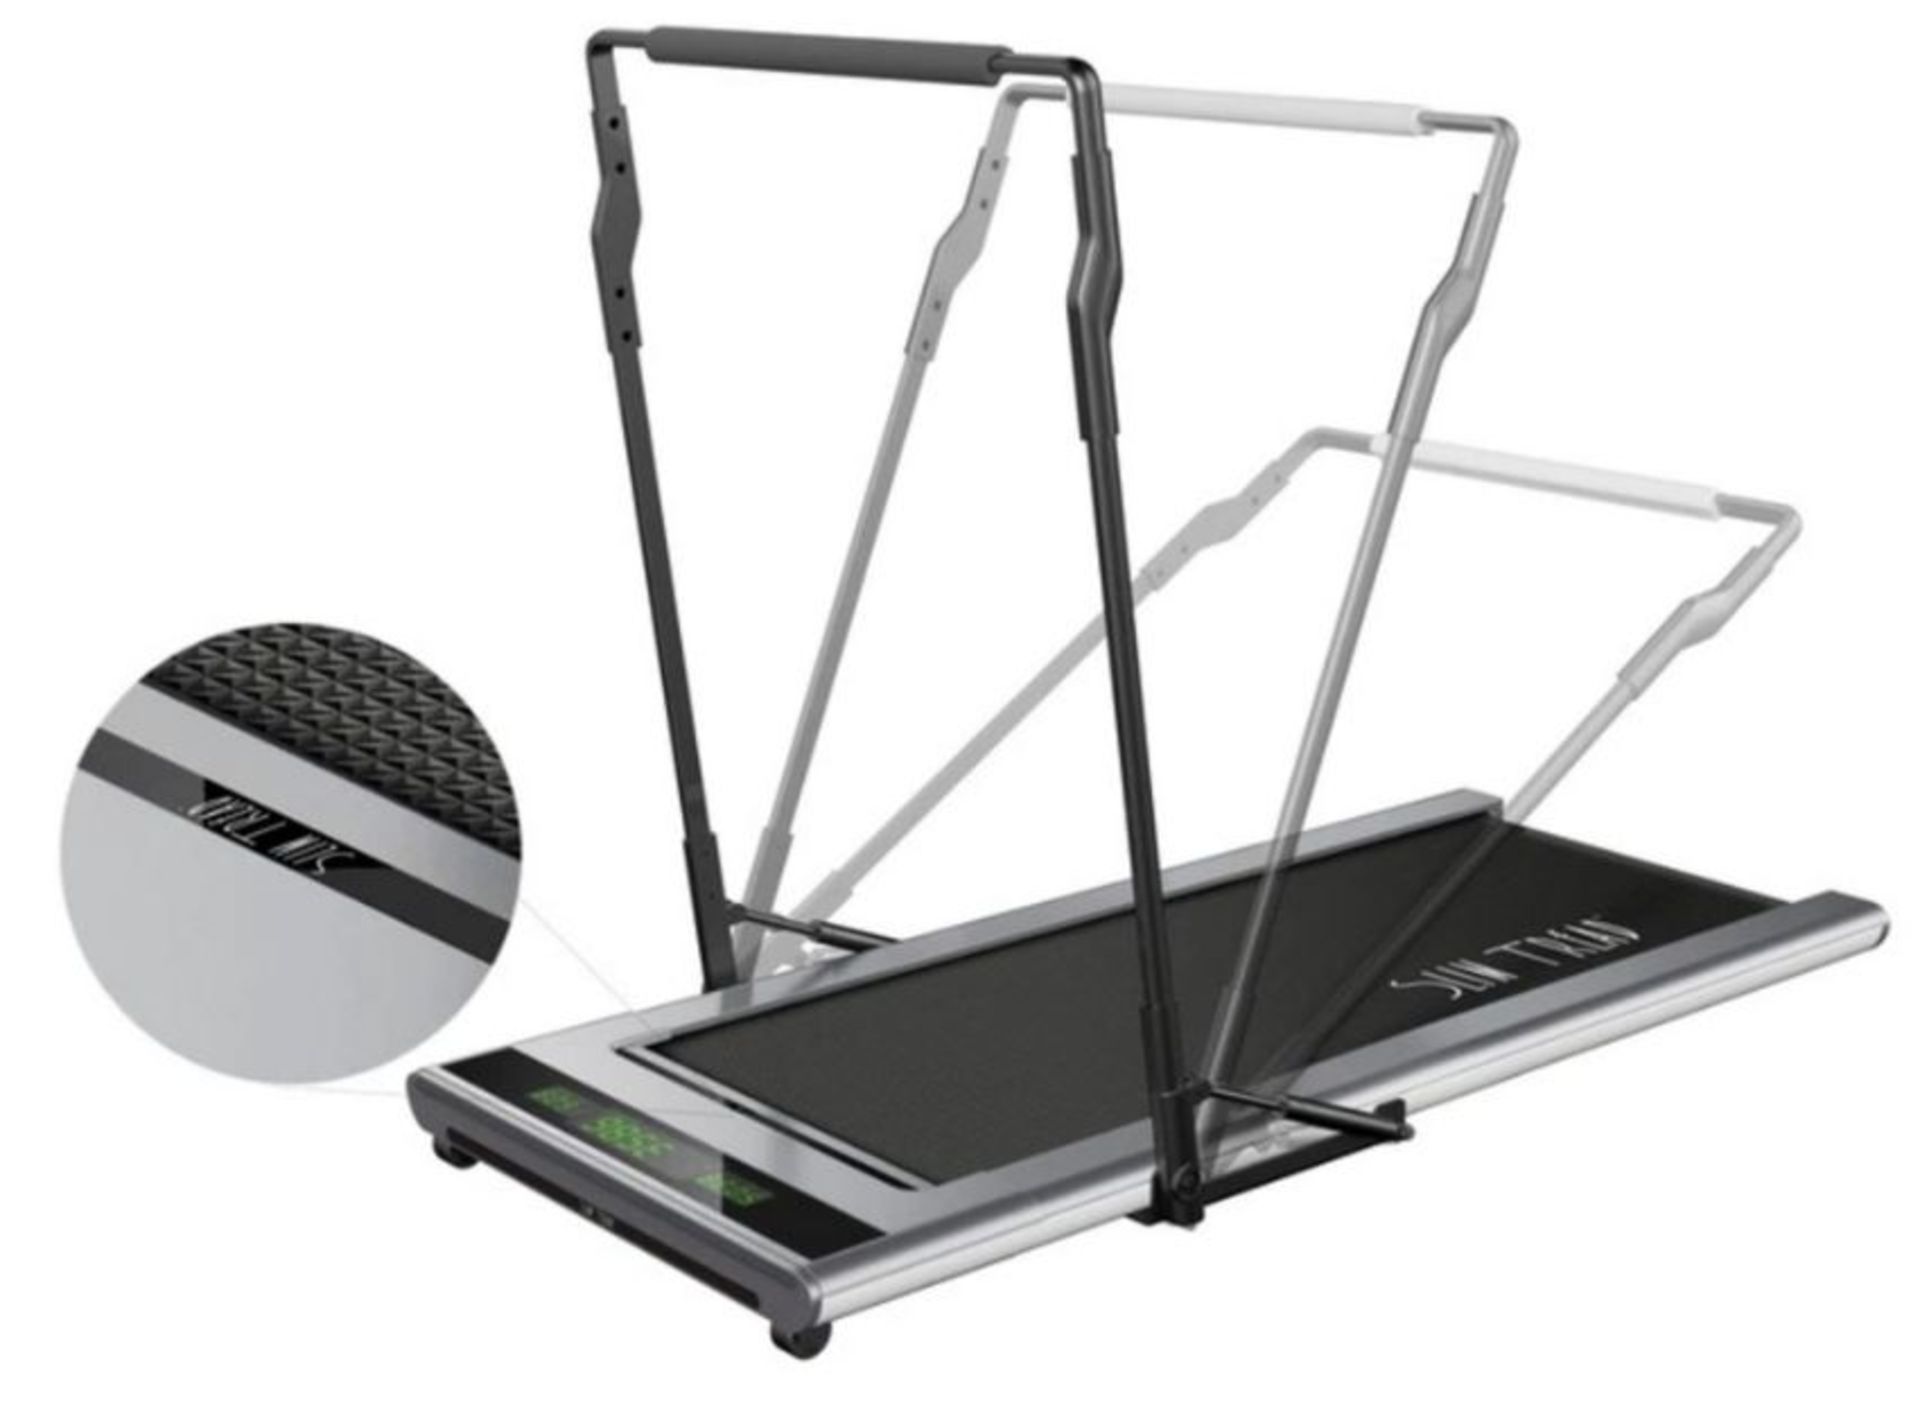 1 x Slim Tread Ultra Thin Smart Treadmill Running / Walking Machine - Lightweight With Folding - Image 5 of 11